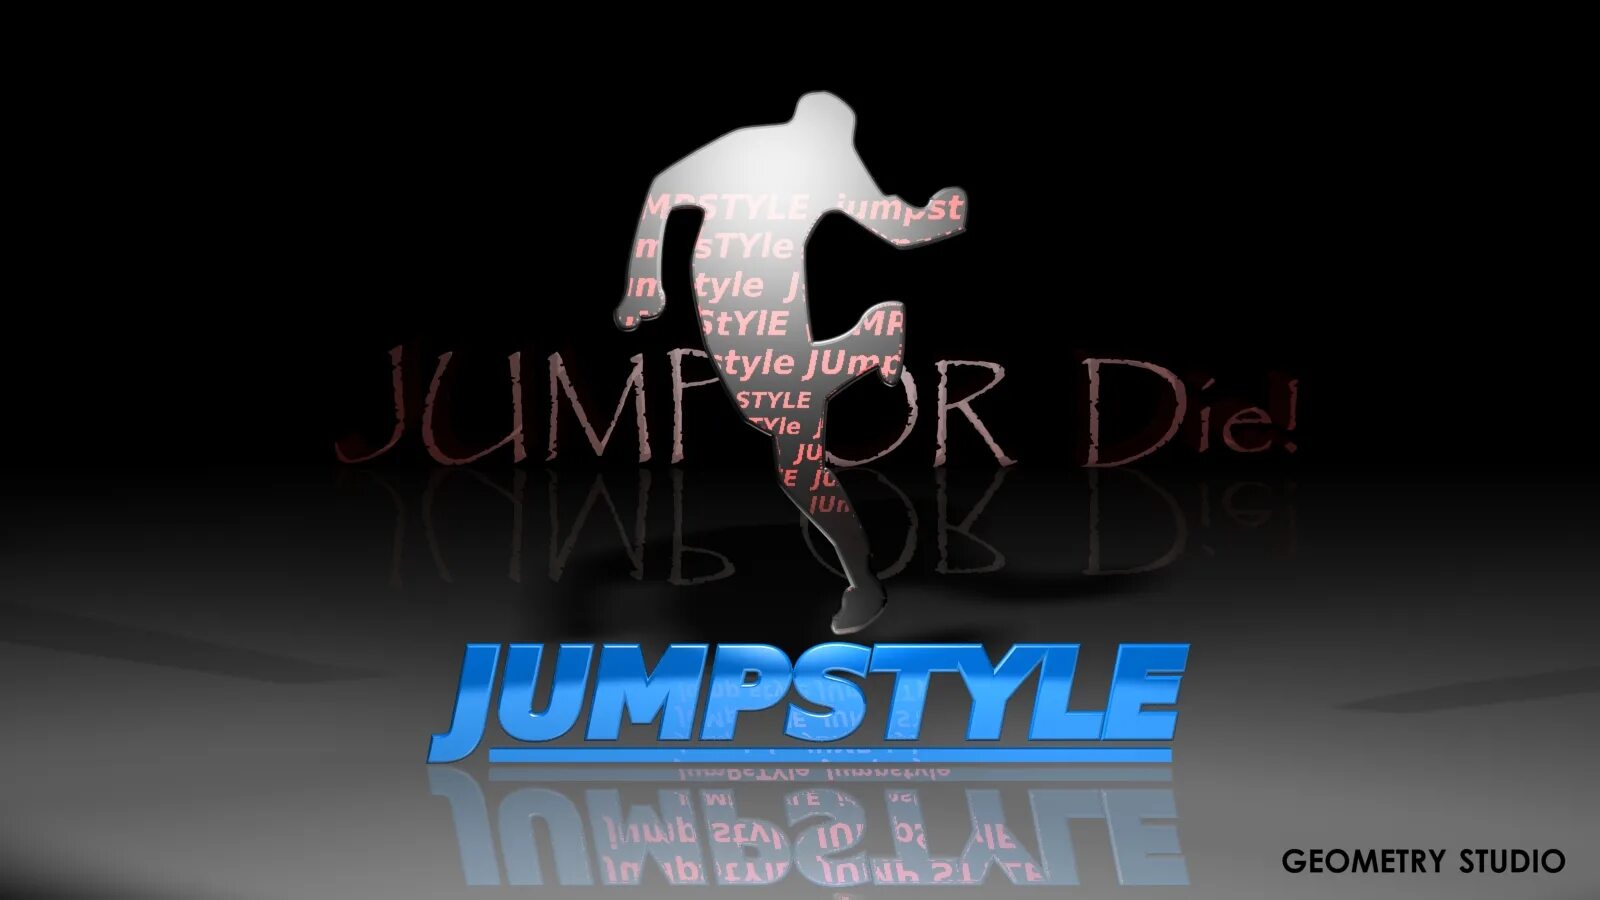 Jumpstyle bootleg ilyhiryu. Стиль Jumpstyle. Патч Jumpstyle. Логотип Jumpstyle. Джамп танец.